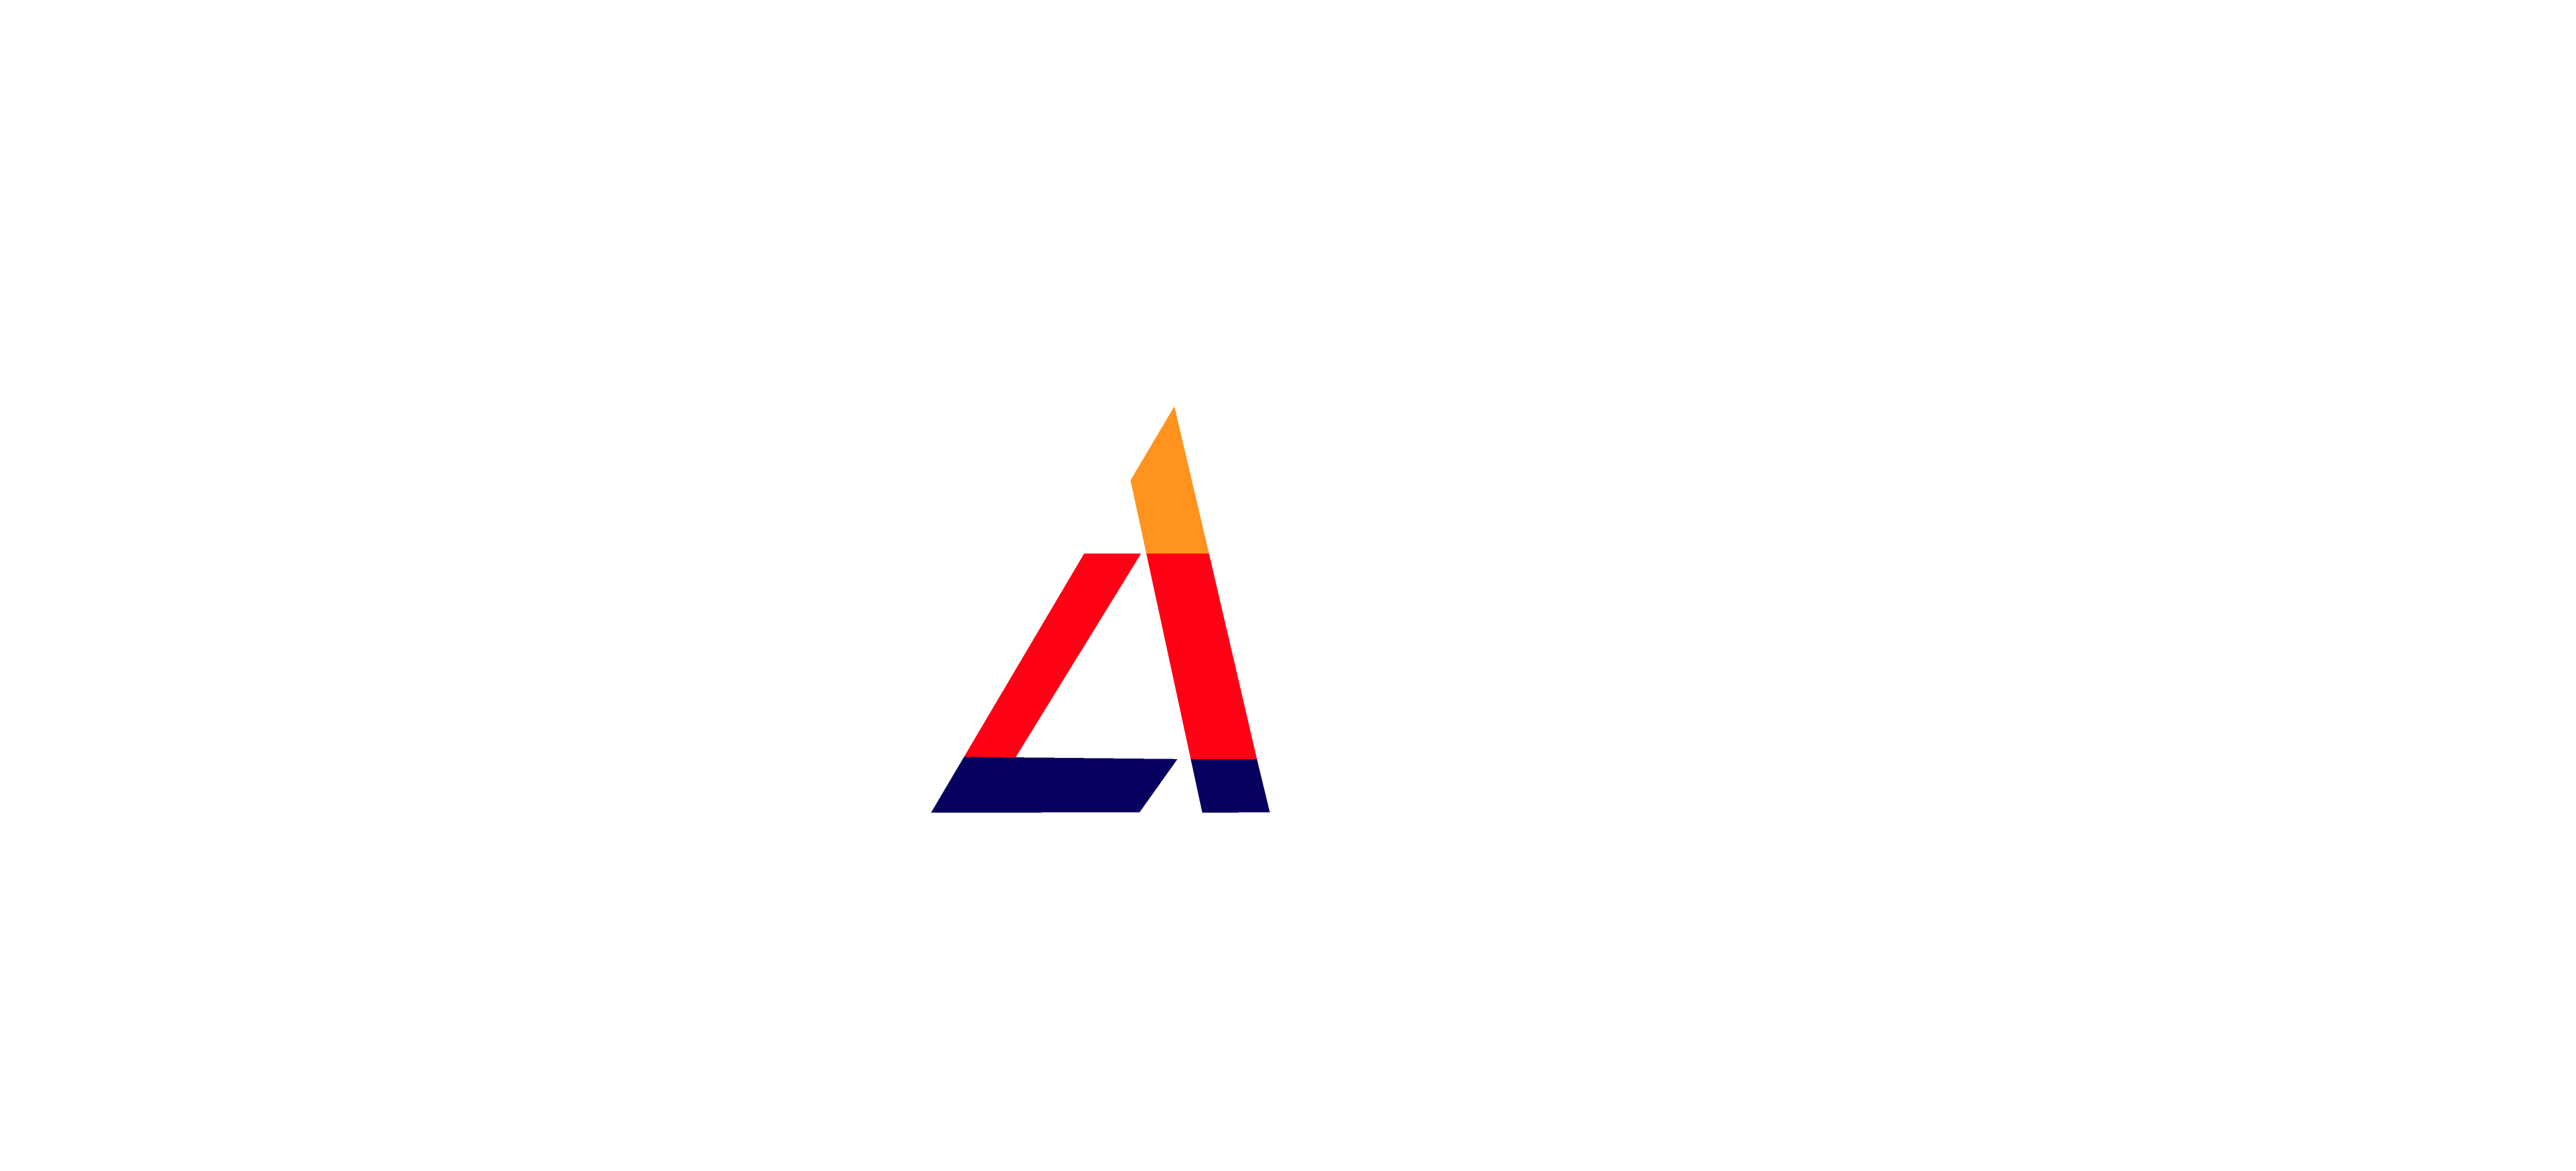 Powersport Nation